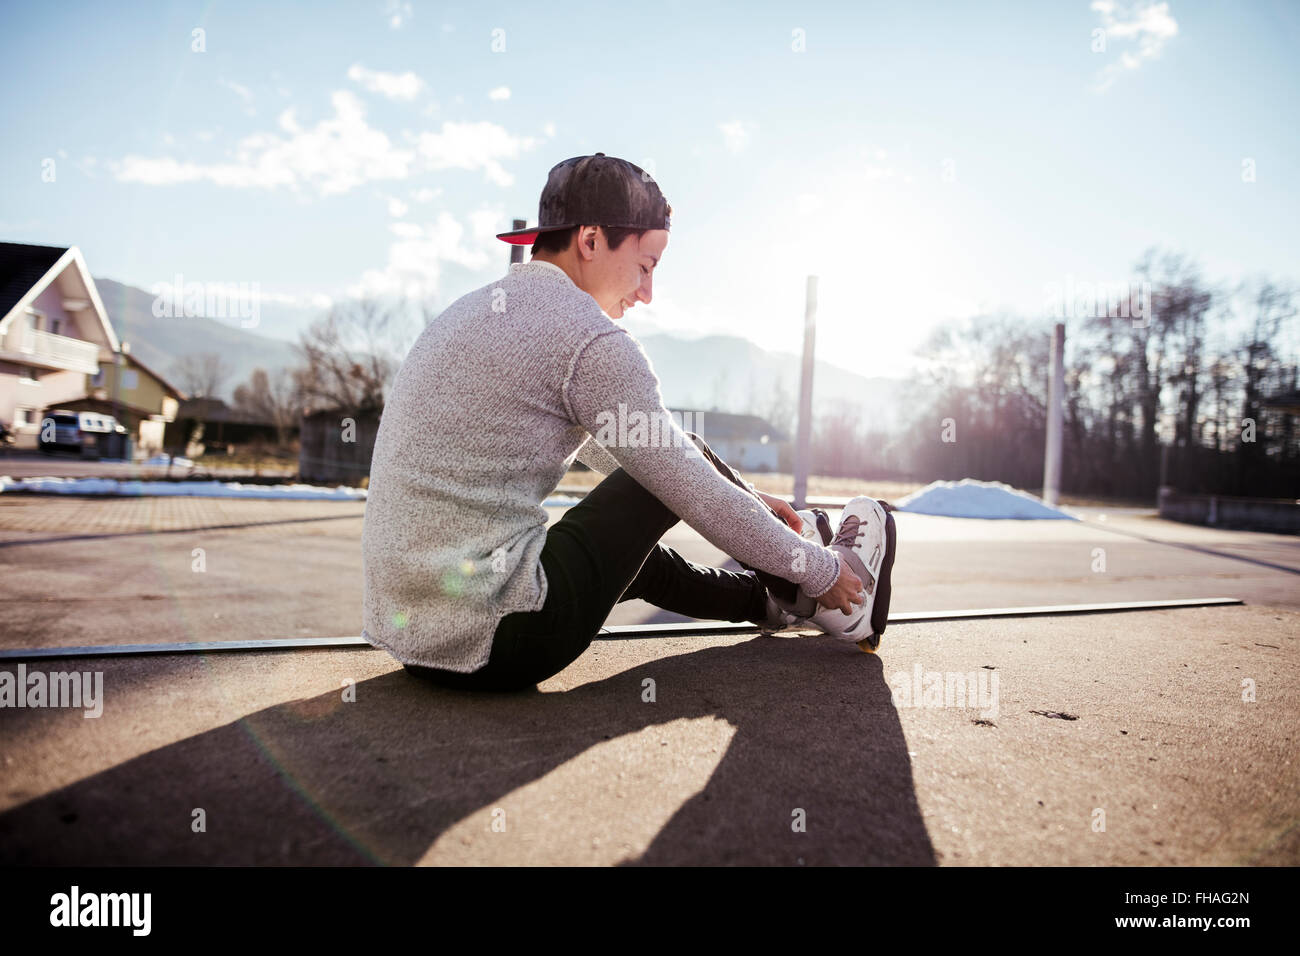 Young man sitting on ramp putting on inline skates Stock Photo